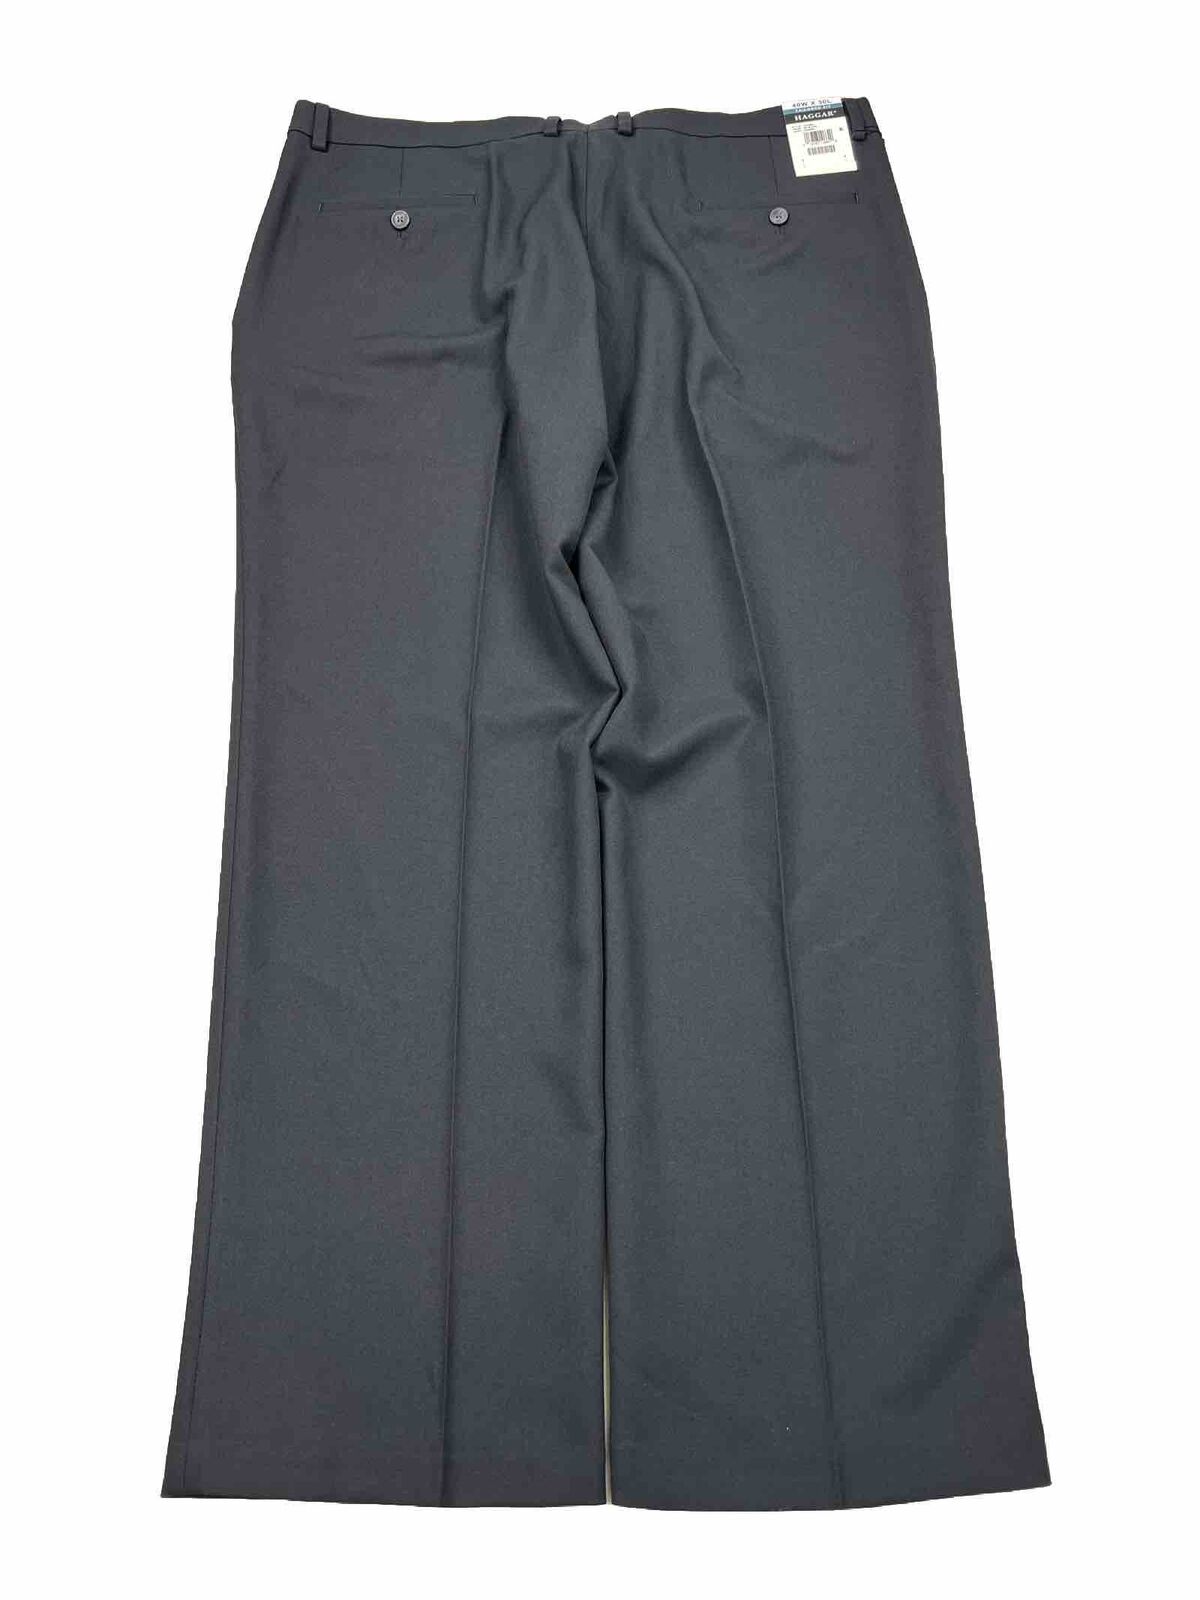 NEW Haggar Men's Black Tailored Fit Flat Front Dress Pants - 40x30